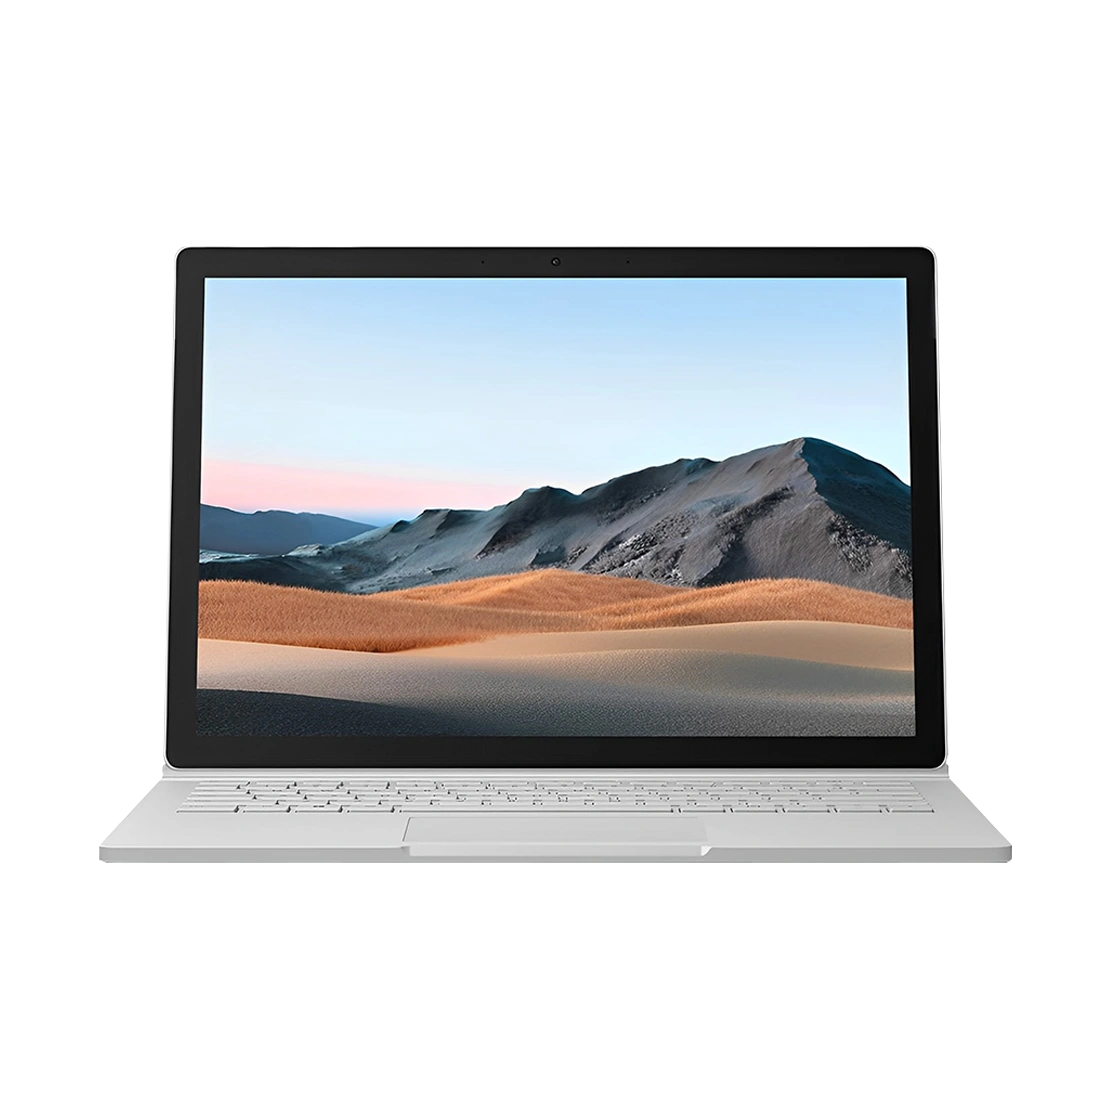 Microsoft Surface Book 3 15 inch Corei7 16GB 256GB GTX 1660 6GB